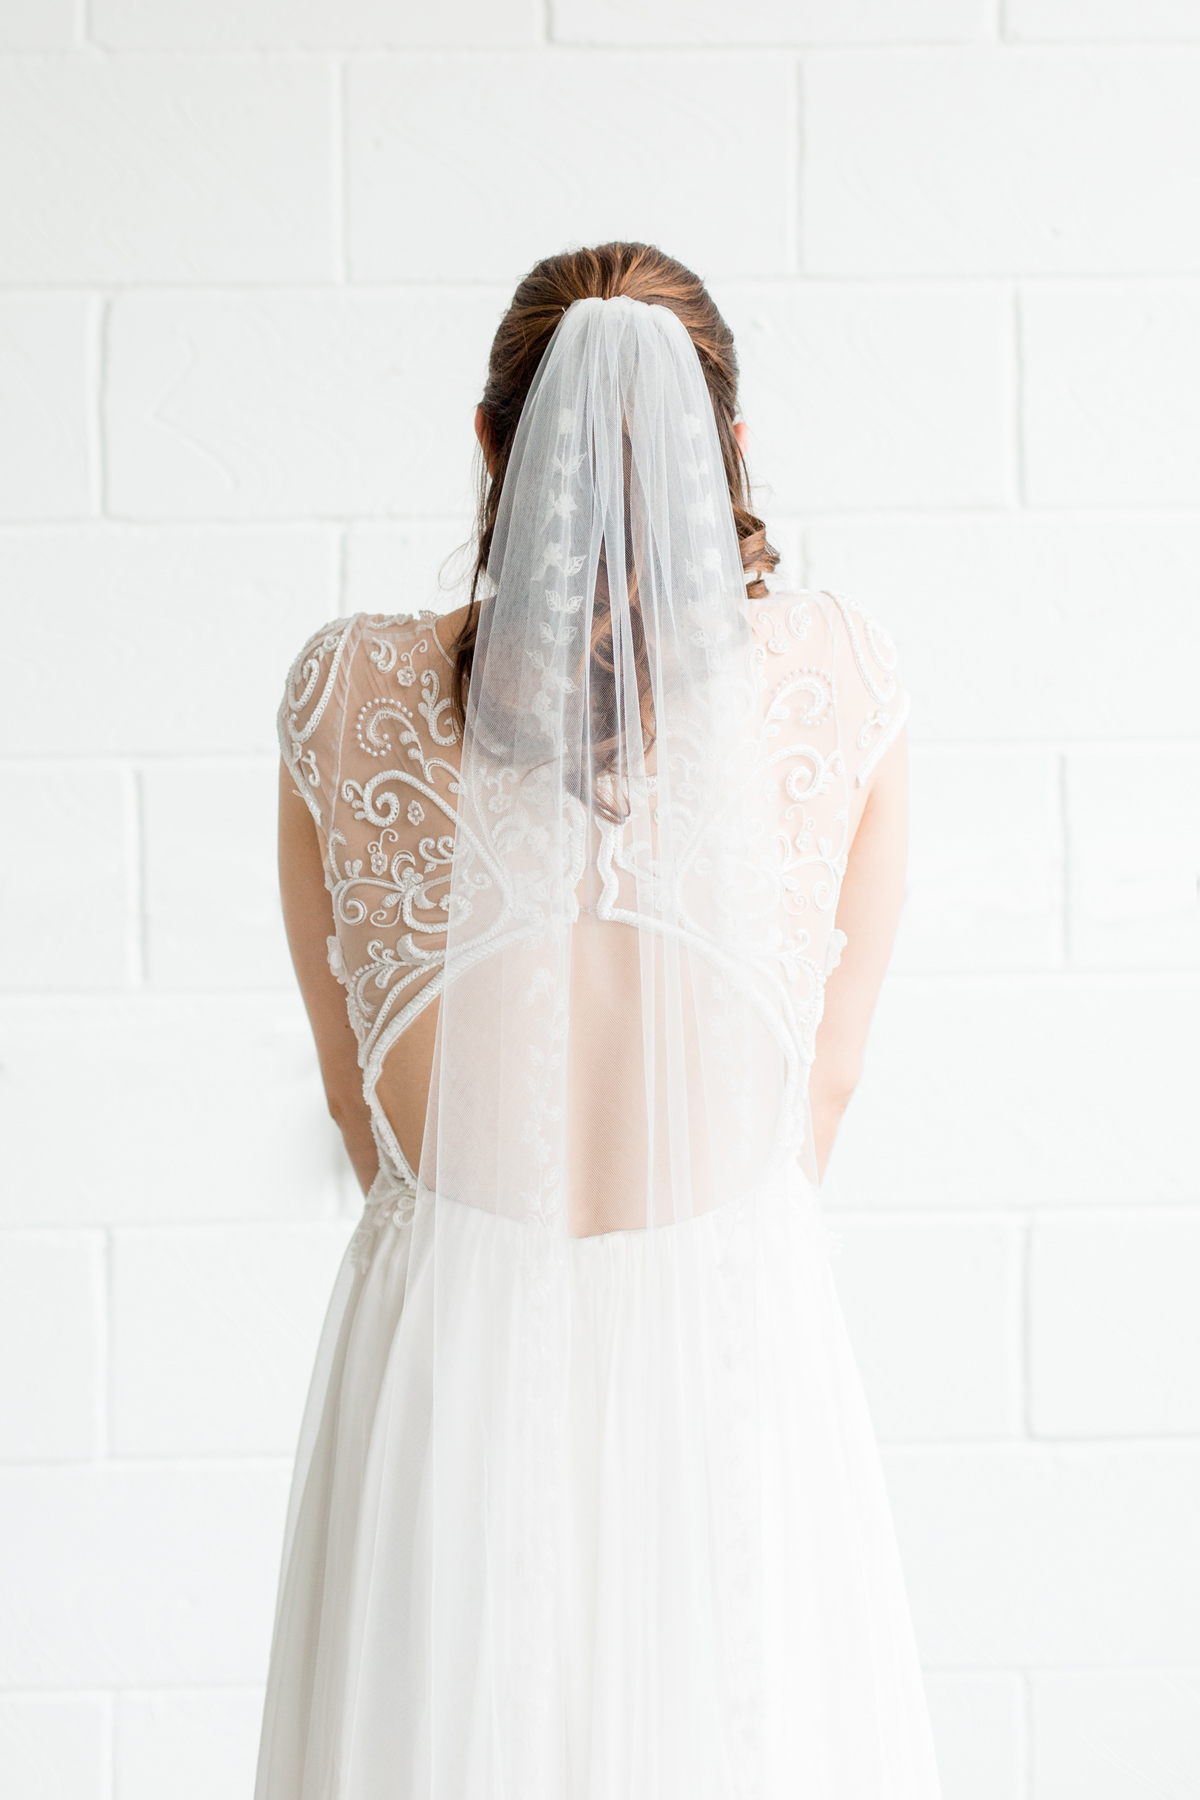  Boho Wedding Dress - Industrial Warehouse Wedding -- The Overwhelmed Bride - Wedding Blog 